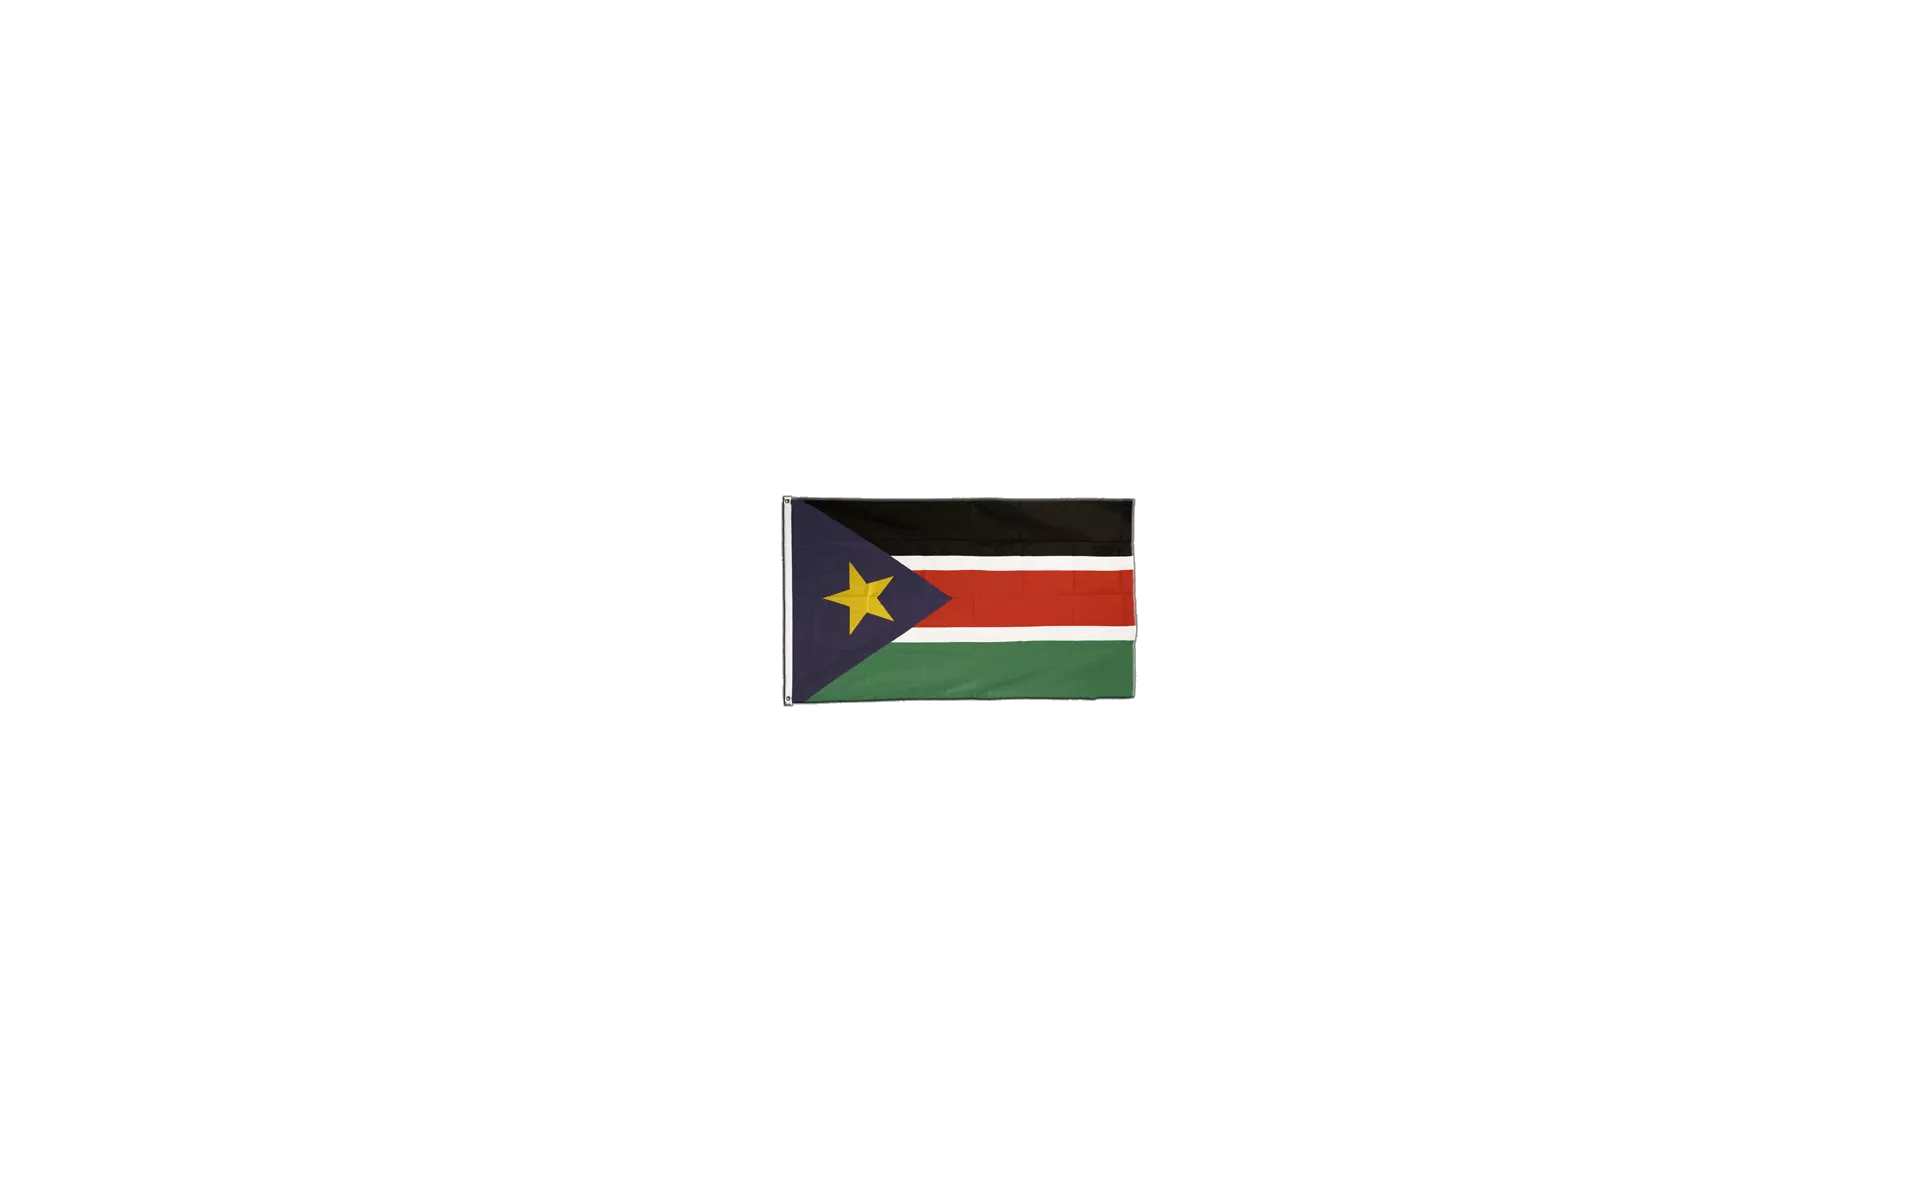 Flagge Südsudan 90 x 150 cm Fahne 